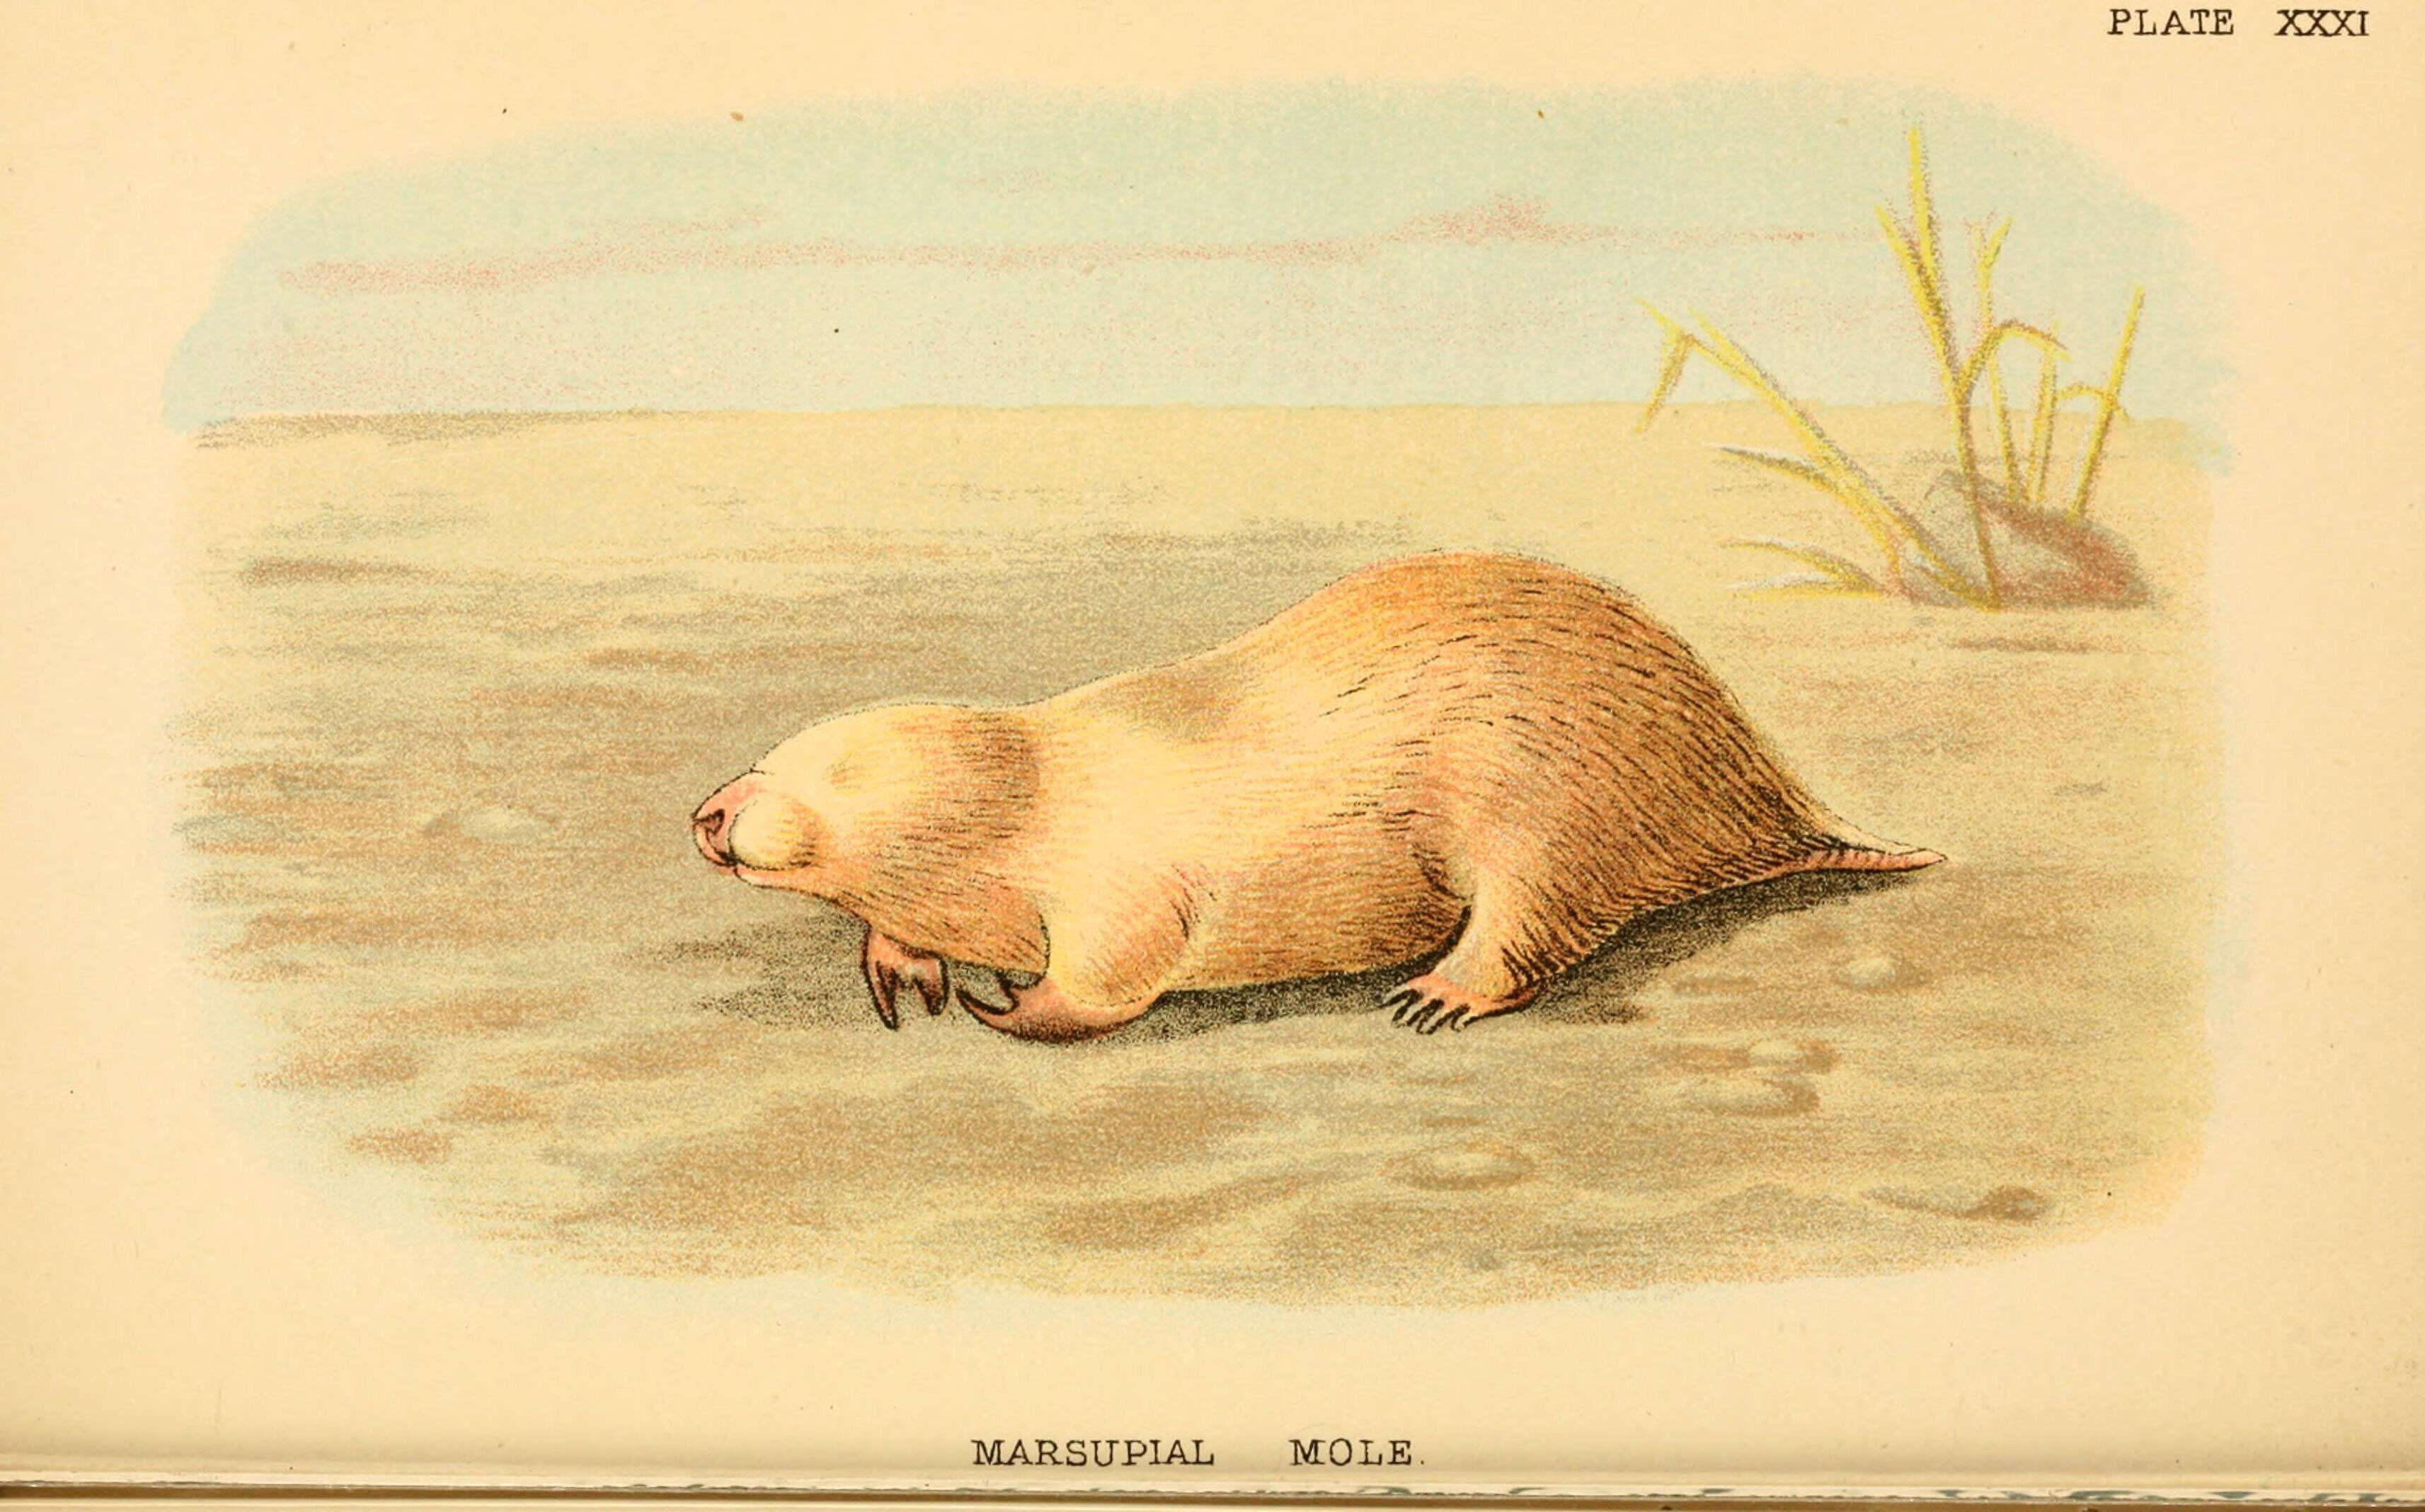 Image of marsupial moles